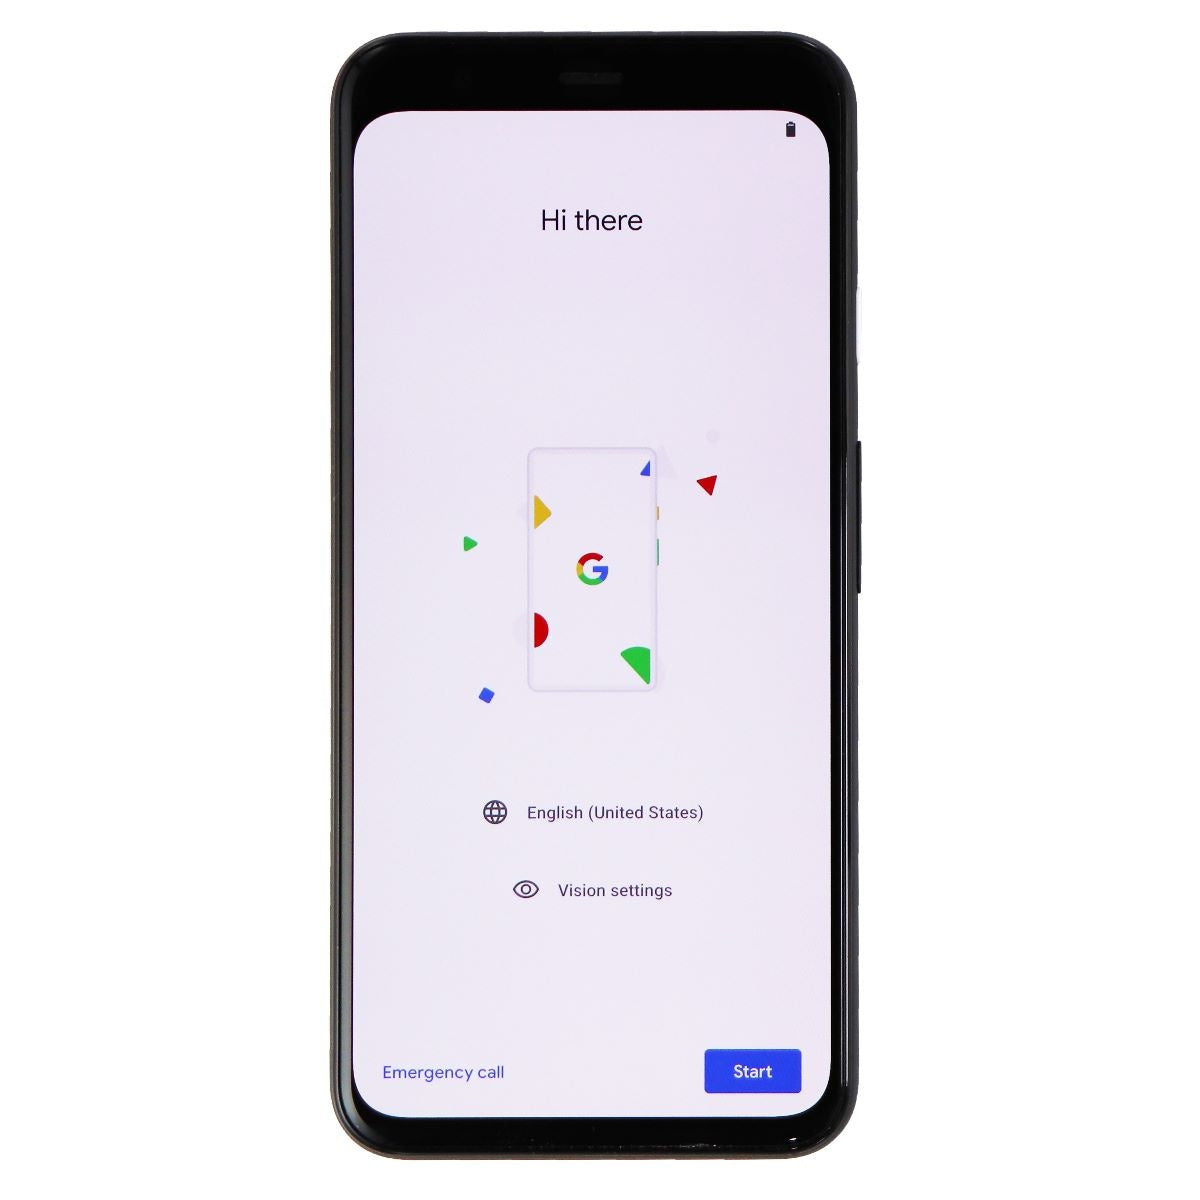 Google Pixel 4 Smartphone (G020I) Verizon ONLY - 64GB / Just Black Cell Phones & Smartphones Google    - Simple Cell Bulk Wholesale Pricing - USA Seller